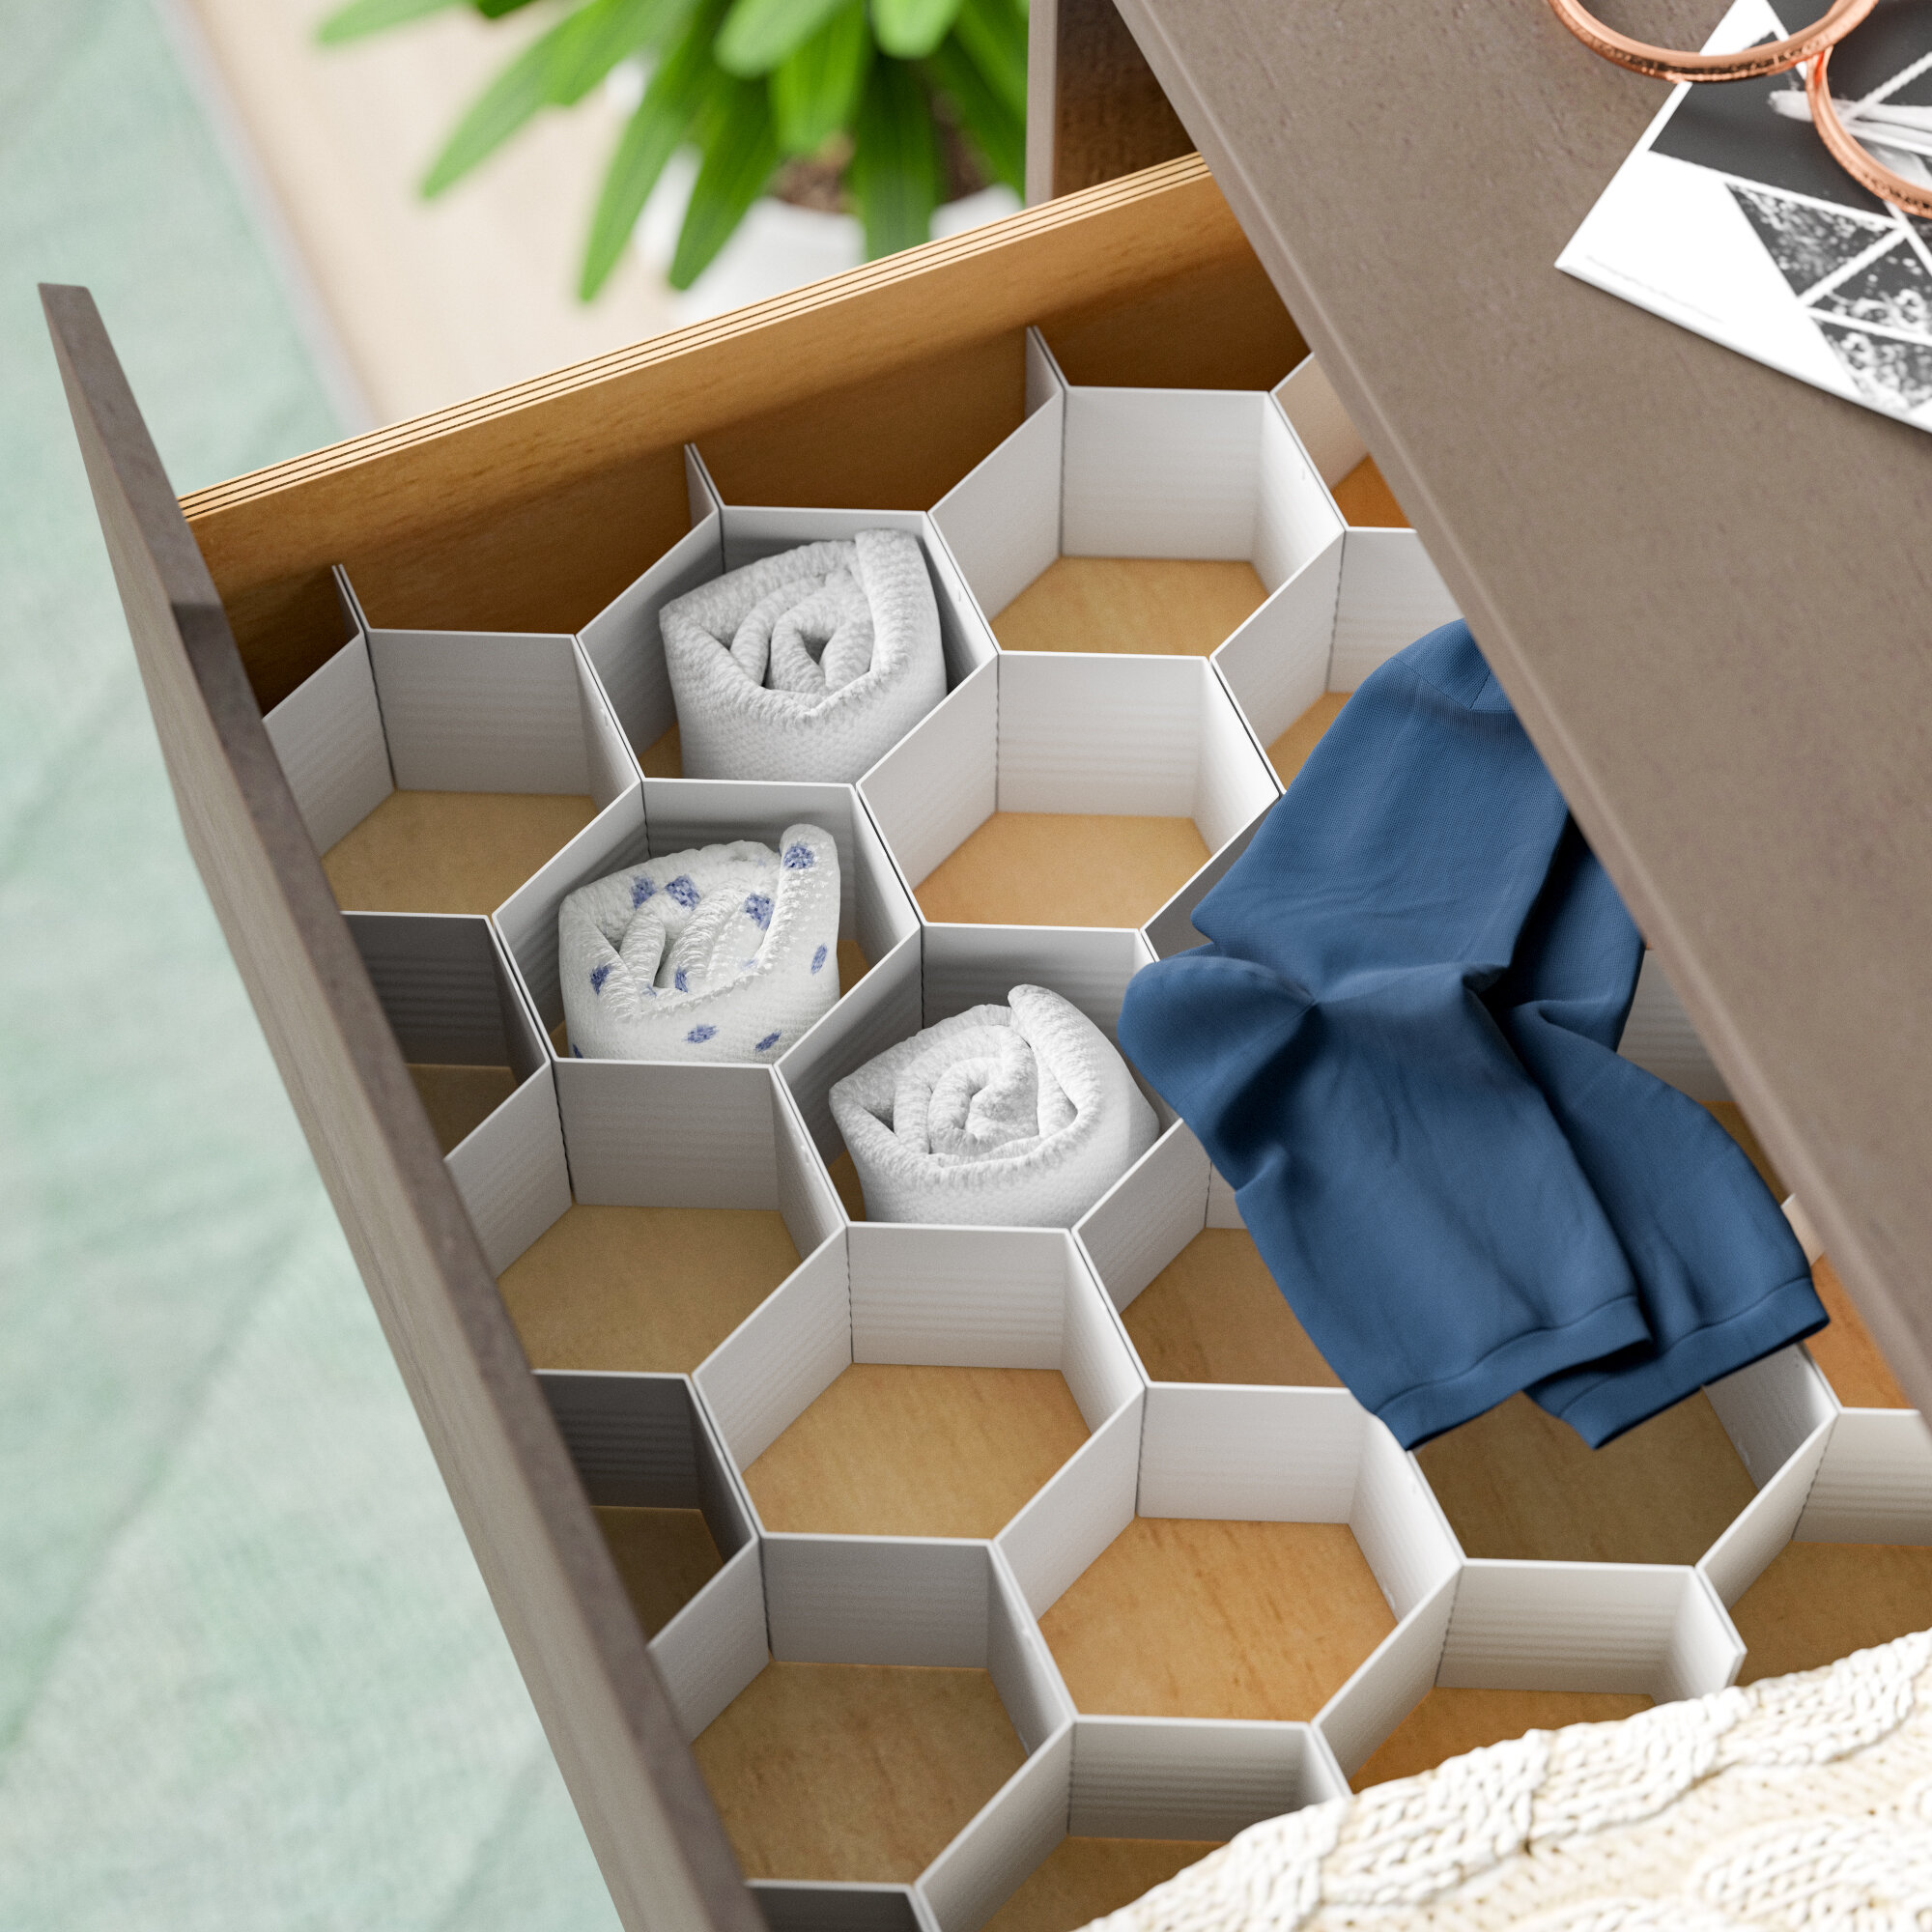 This honeycomb drawer organizer transformed my wardrobe